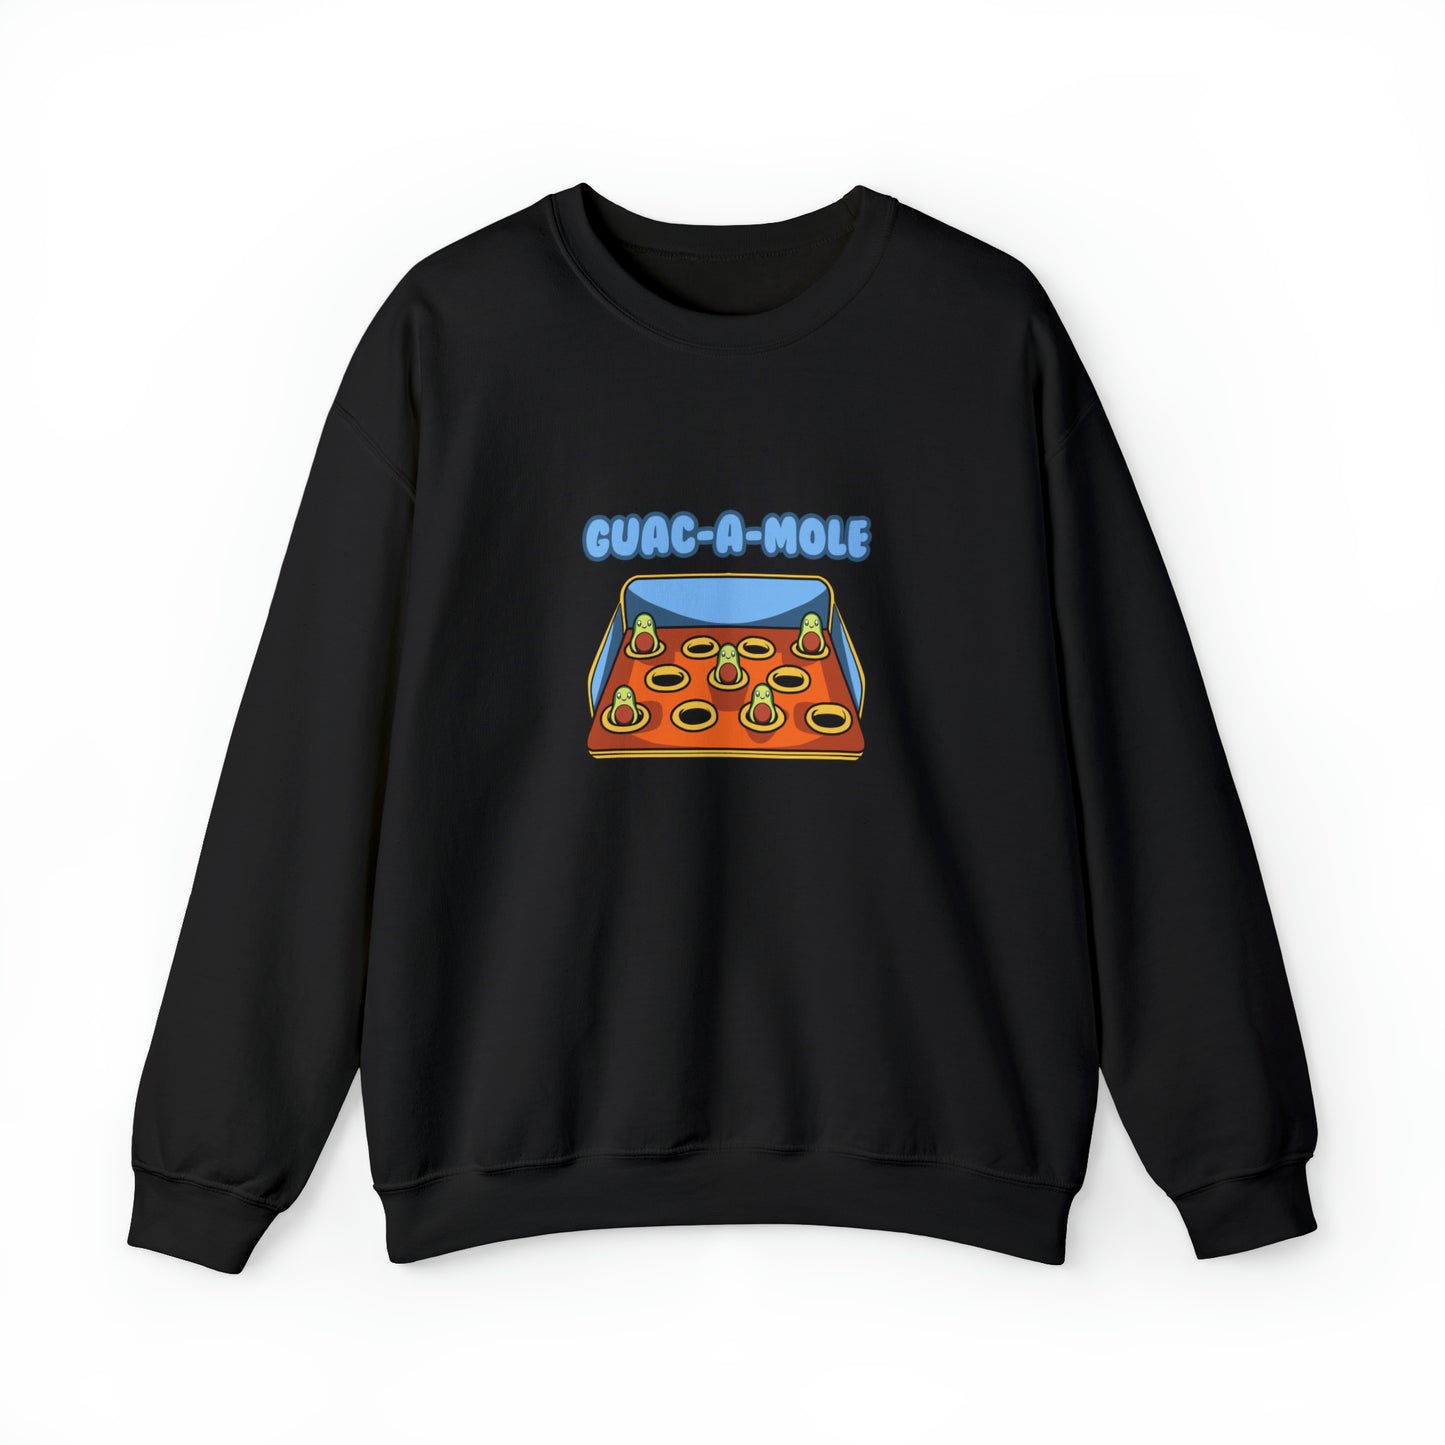 Custom Parody Crewneck Sweatshirt, Guac-a-mole Design